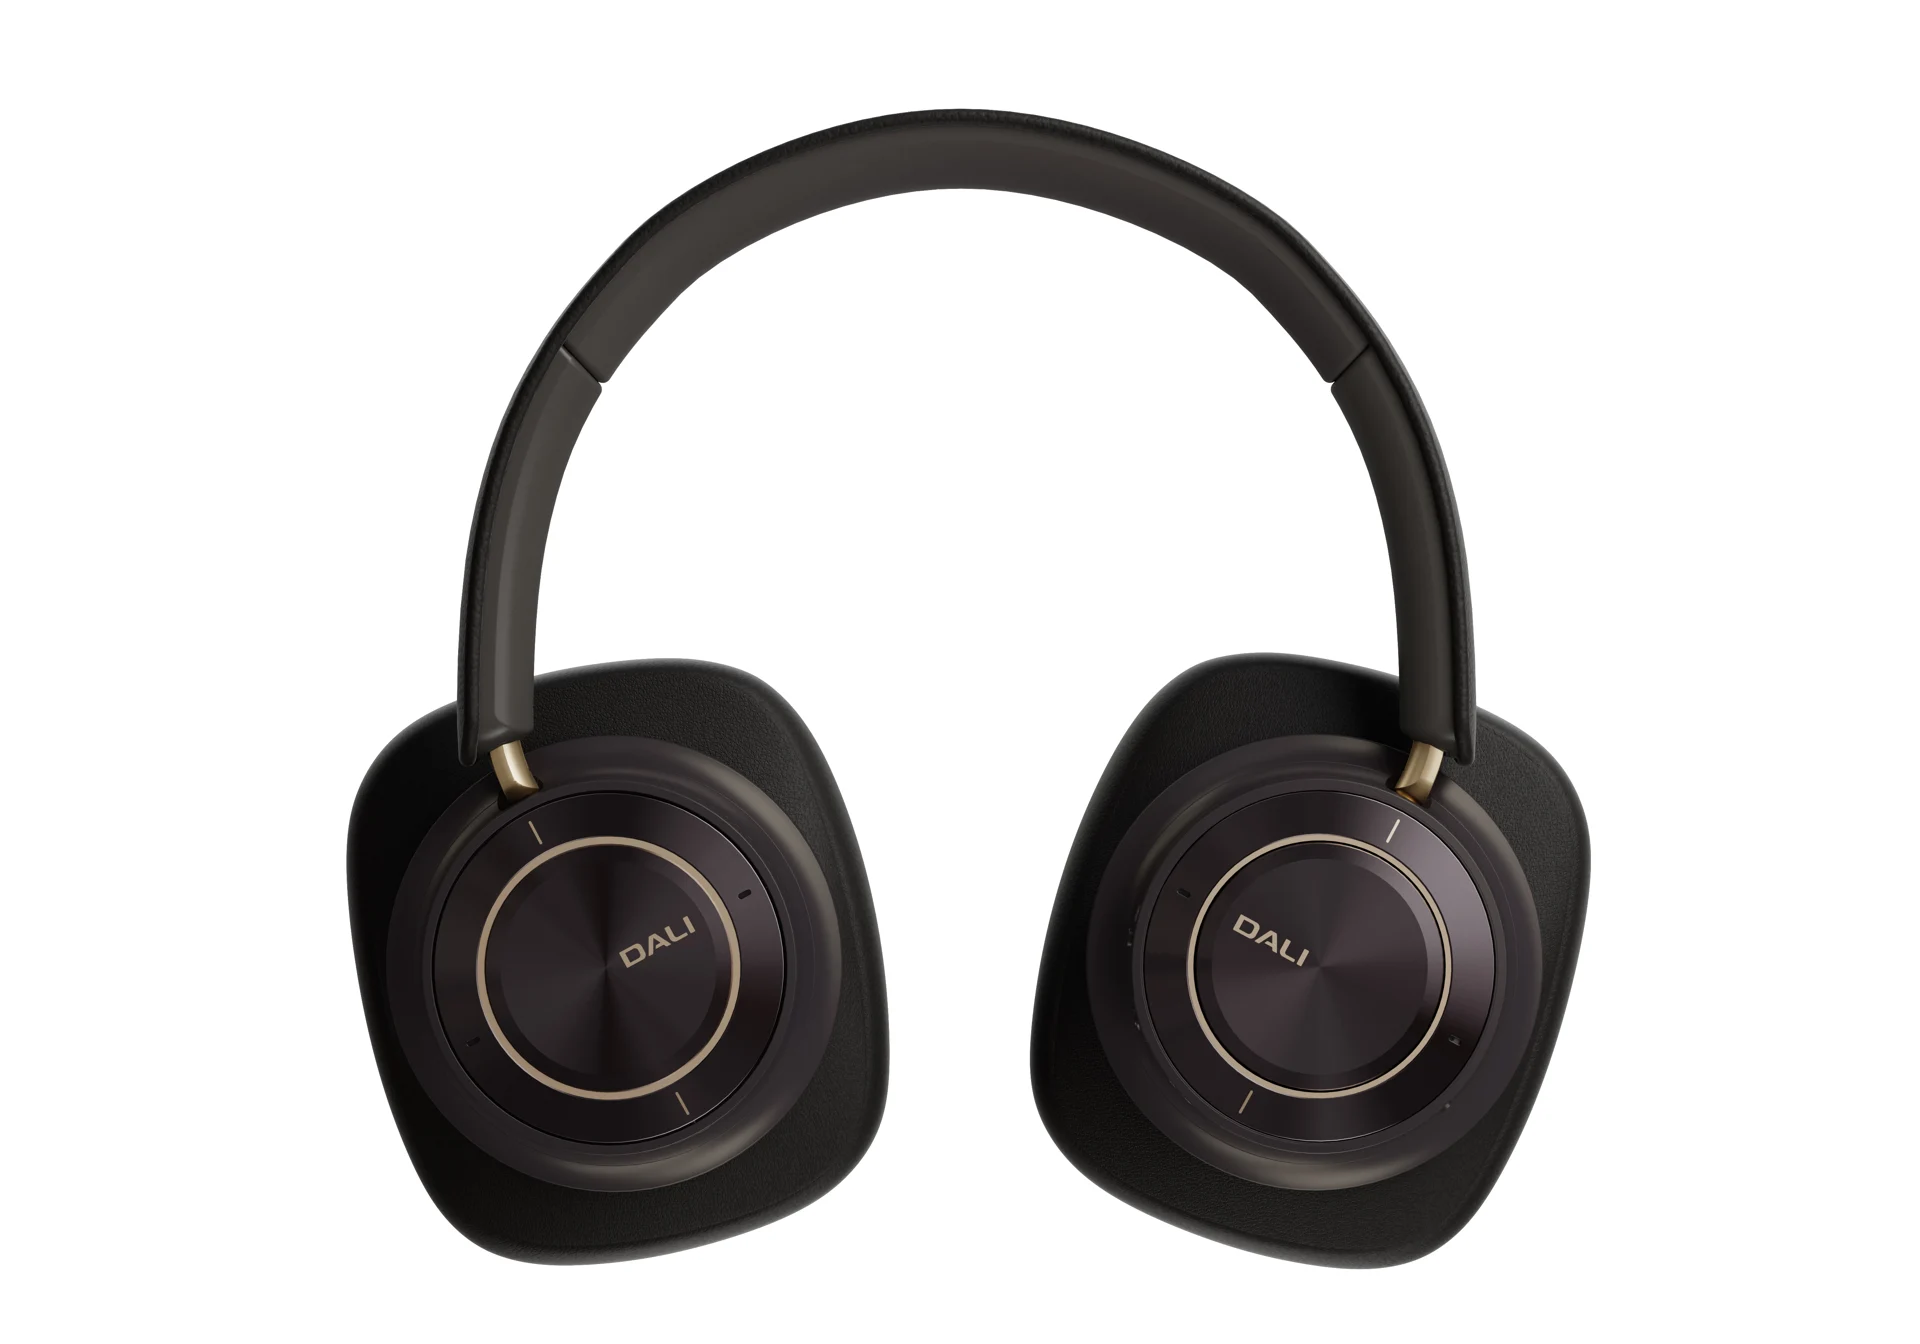 dali-10-12-headphones